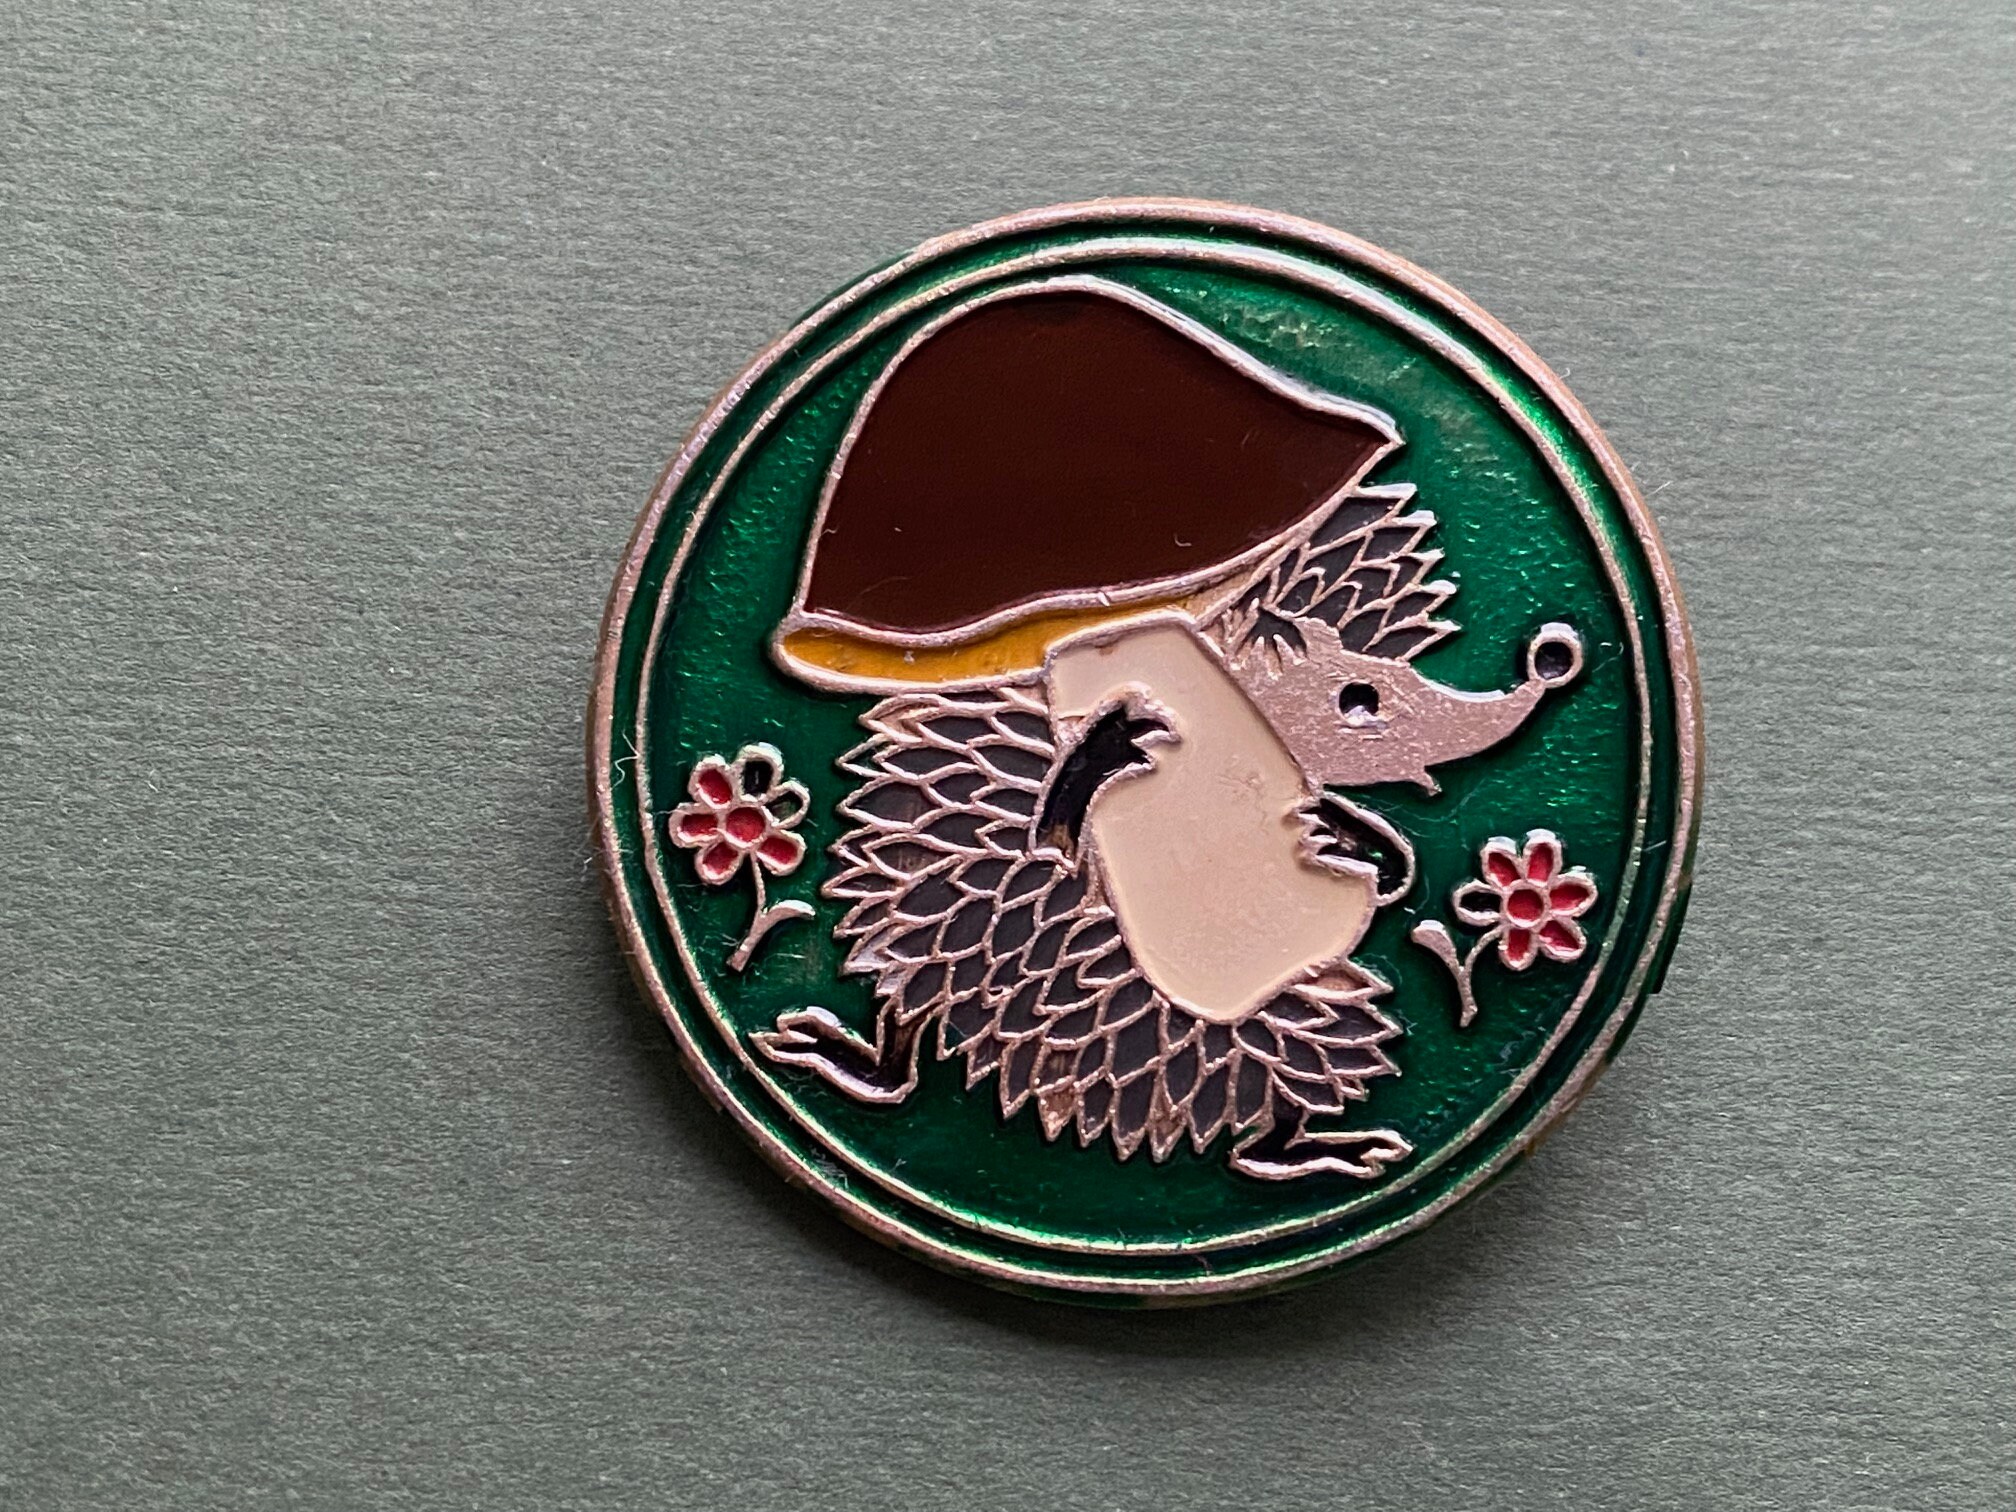 251 ,Badges of the USSR,Vintage badges,Badges of the Soviet Union Badge baby hedgehog with overflow mushroom